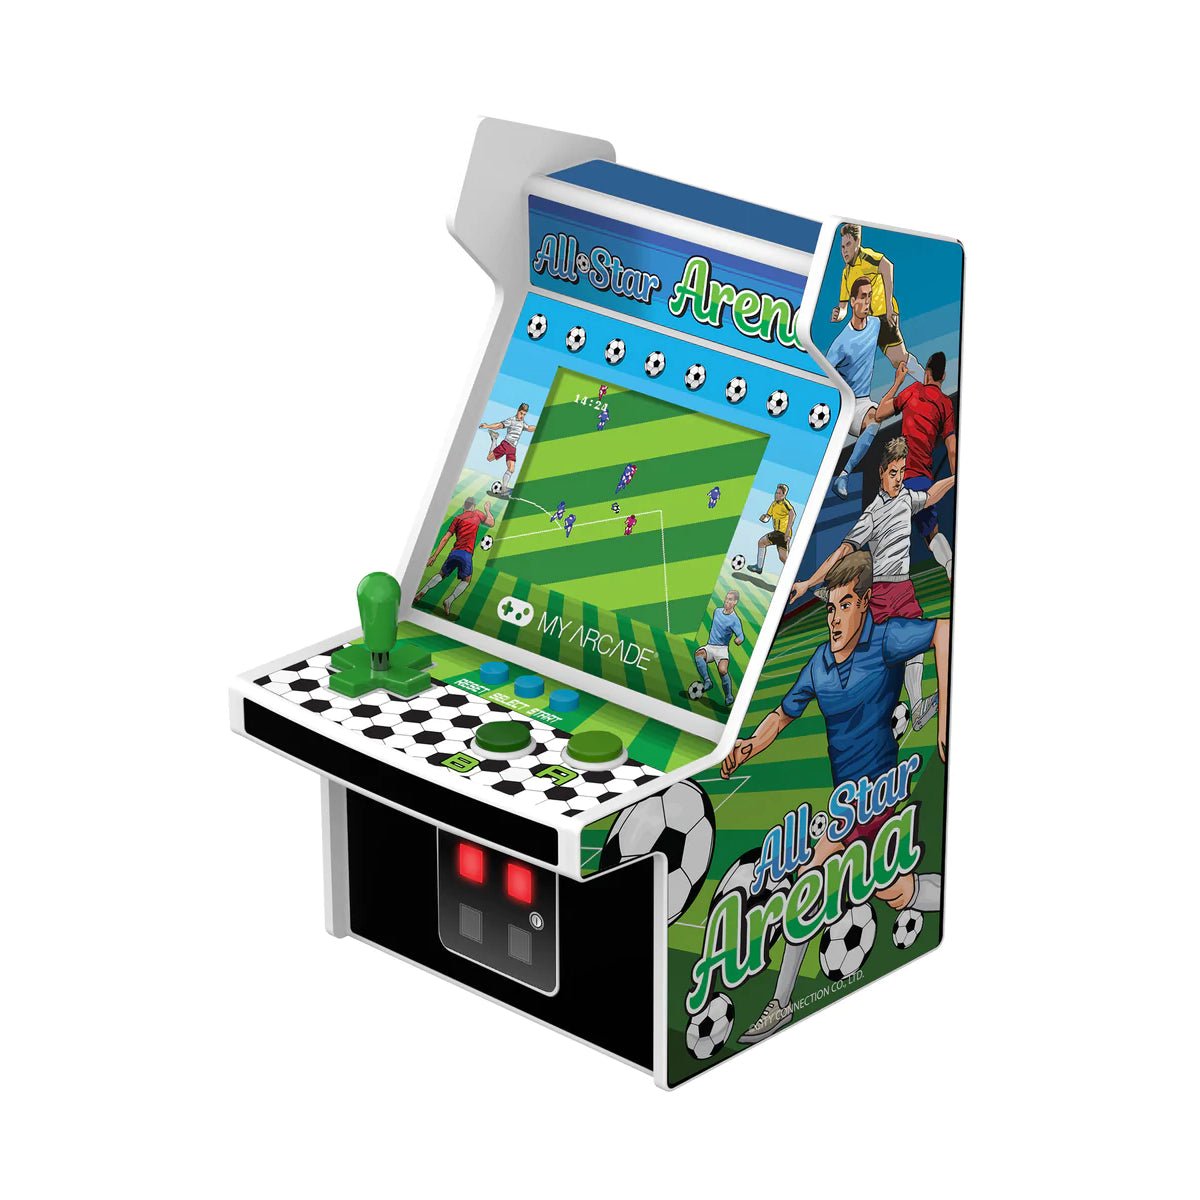 My Arcade All-Star Arena +300 Bonus Games Collectible Retro - Green/White - ماكينة ألعاب - Store 974 | ستور ٩٧٤